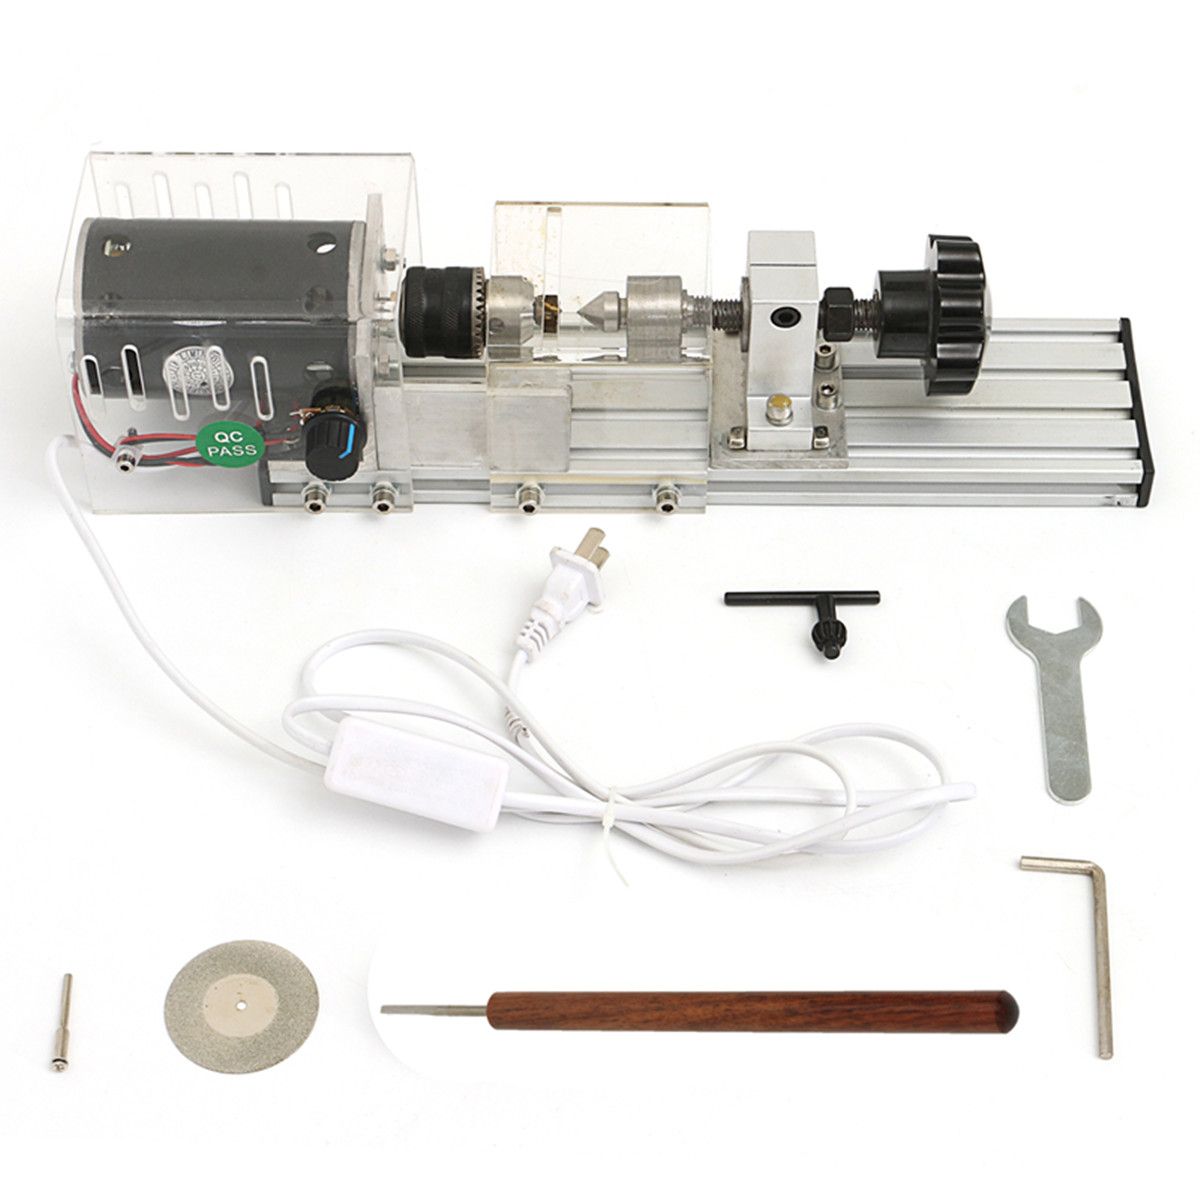 Raitool-350W-Mini-Lathe-Machine-Woodworking-DIY-Lathe-Set-with-Power-Adapter-1234285